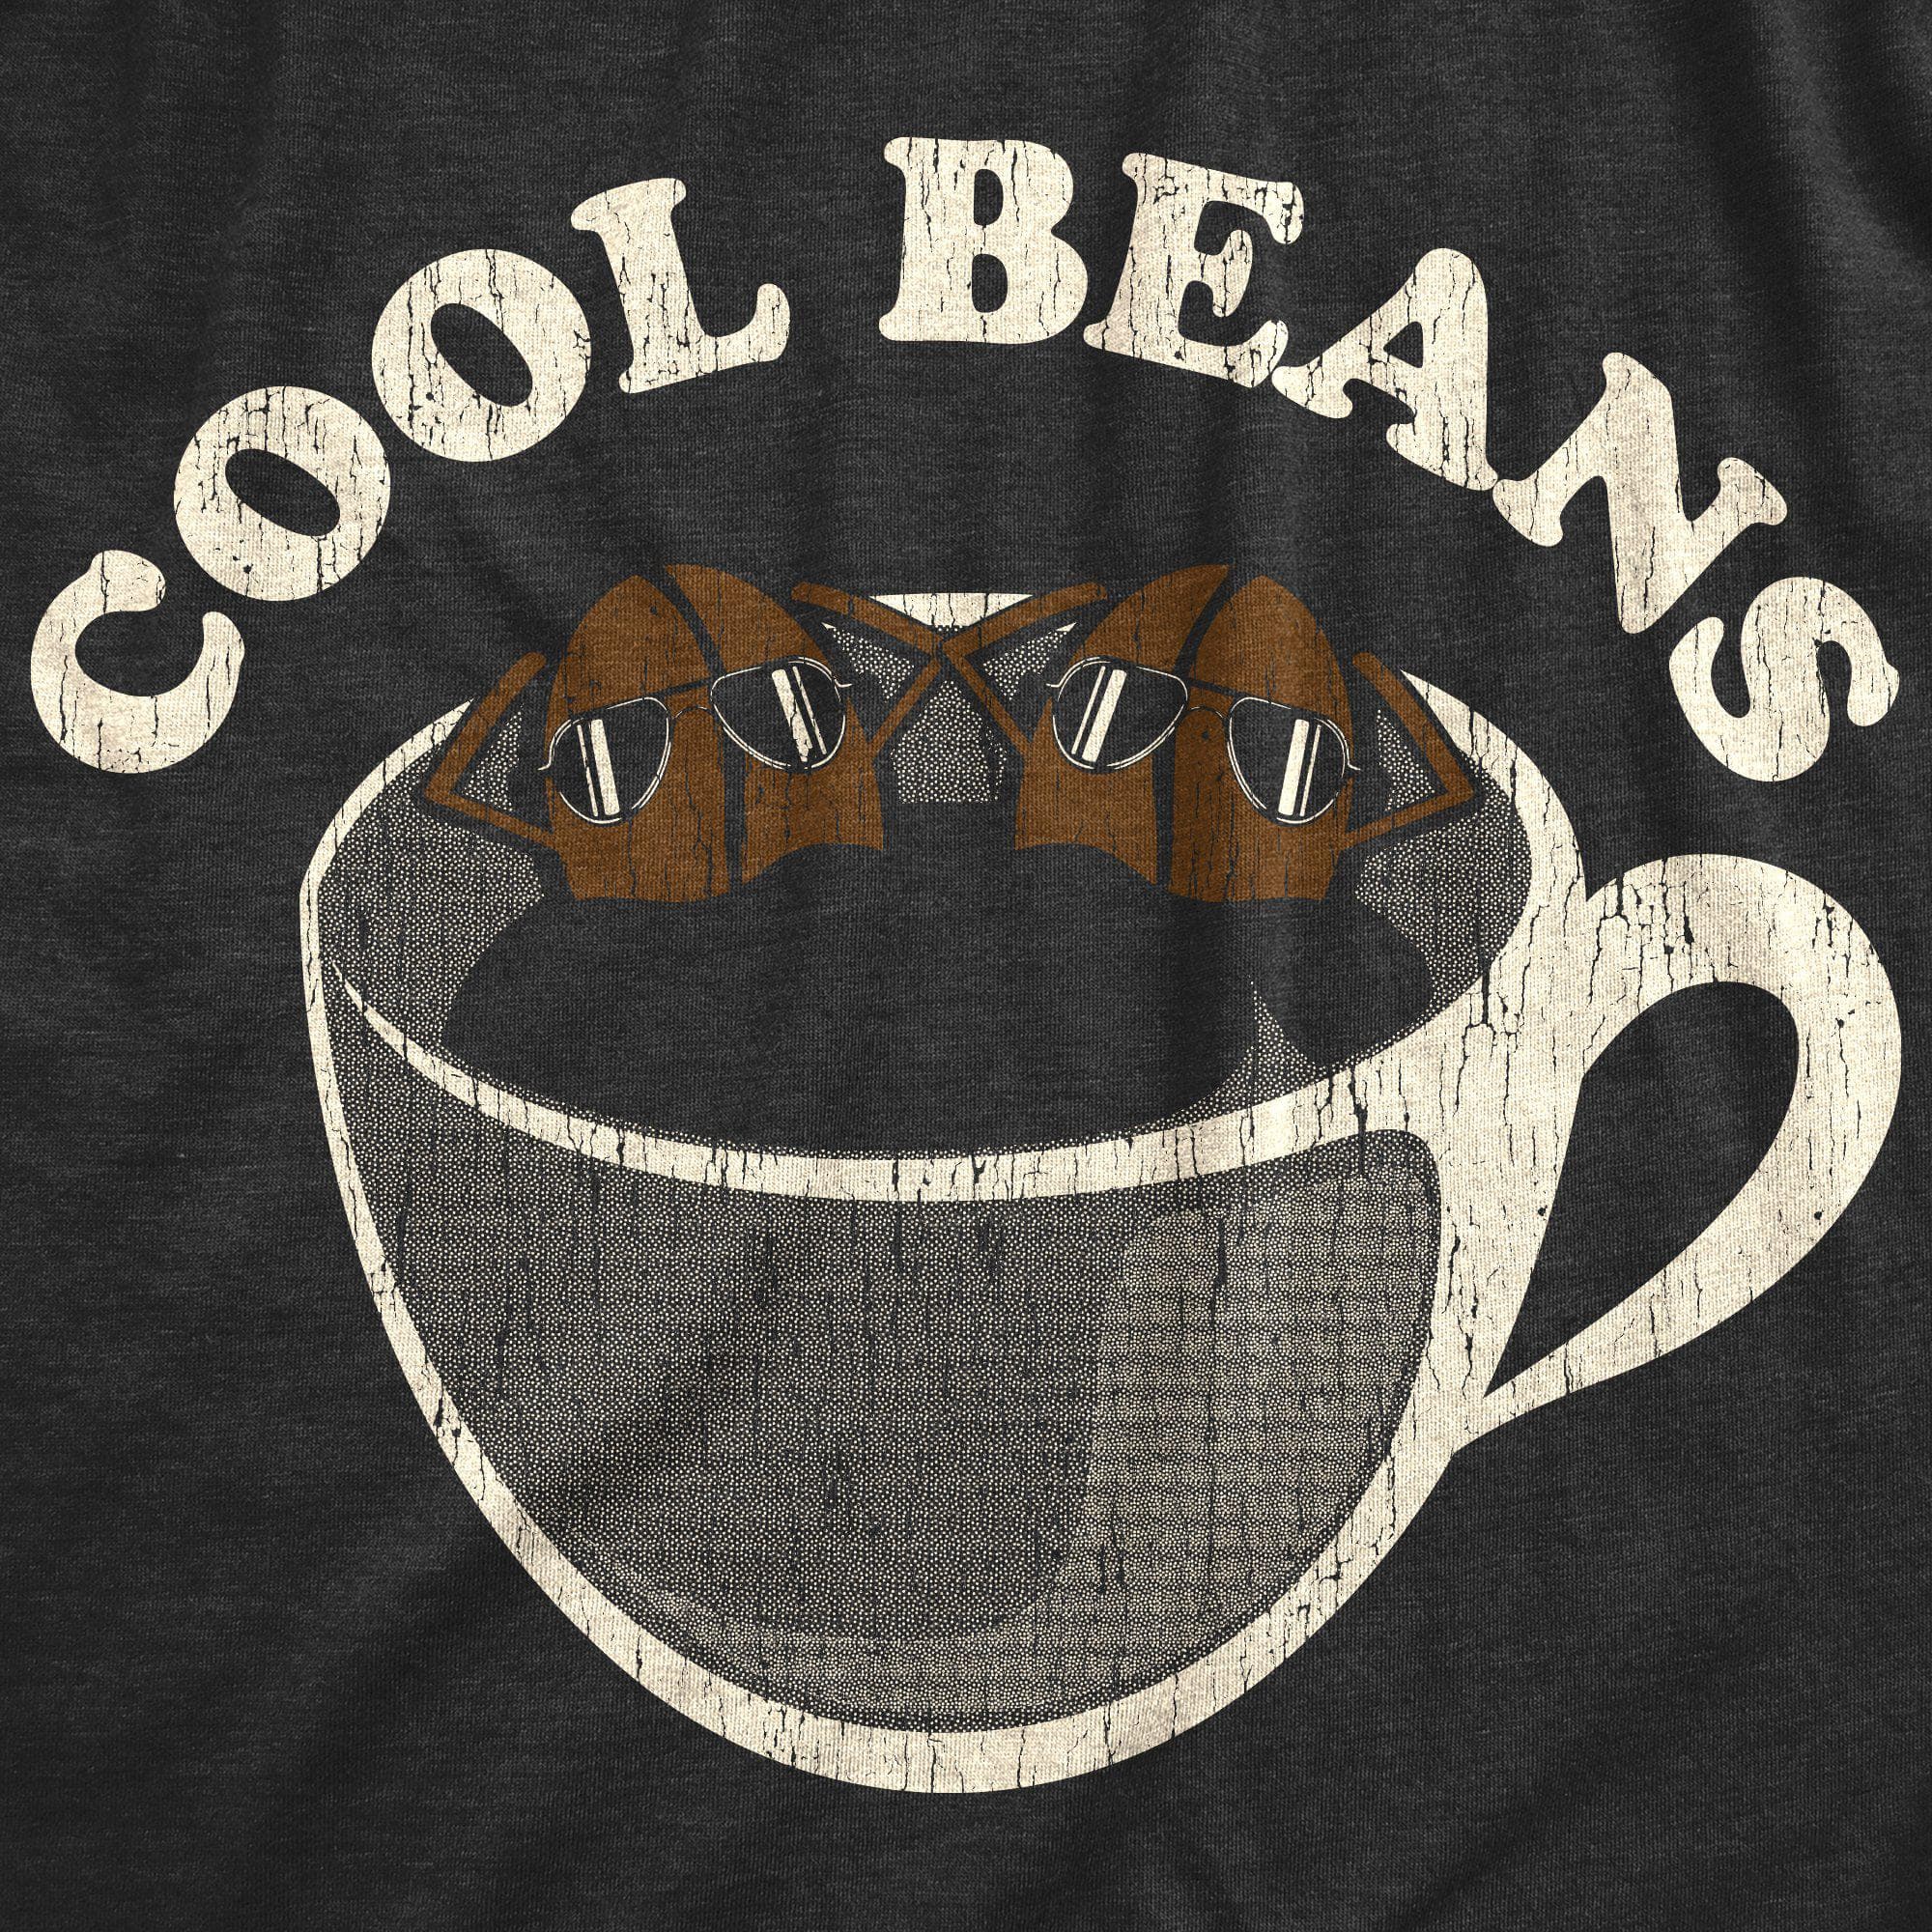 Cool Beans Men's Tshirt - Crazy Dog T-Shirts